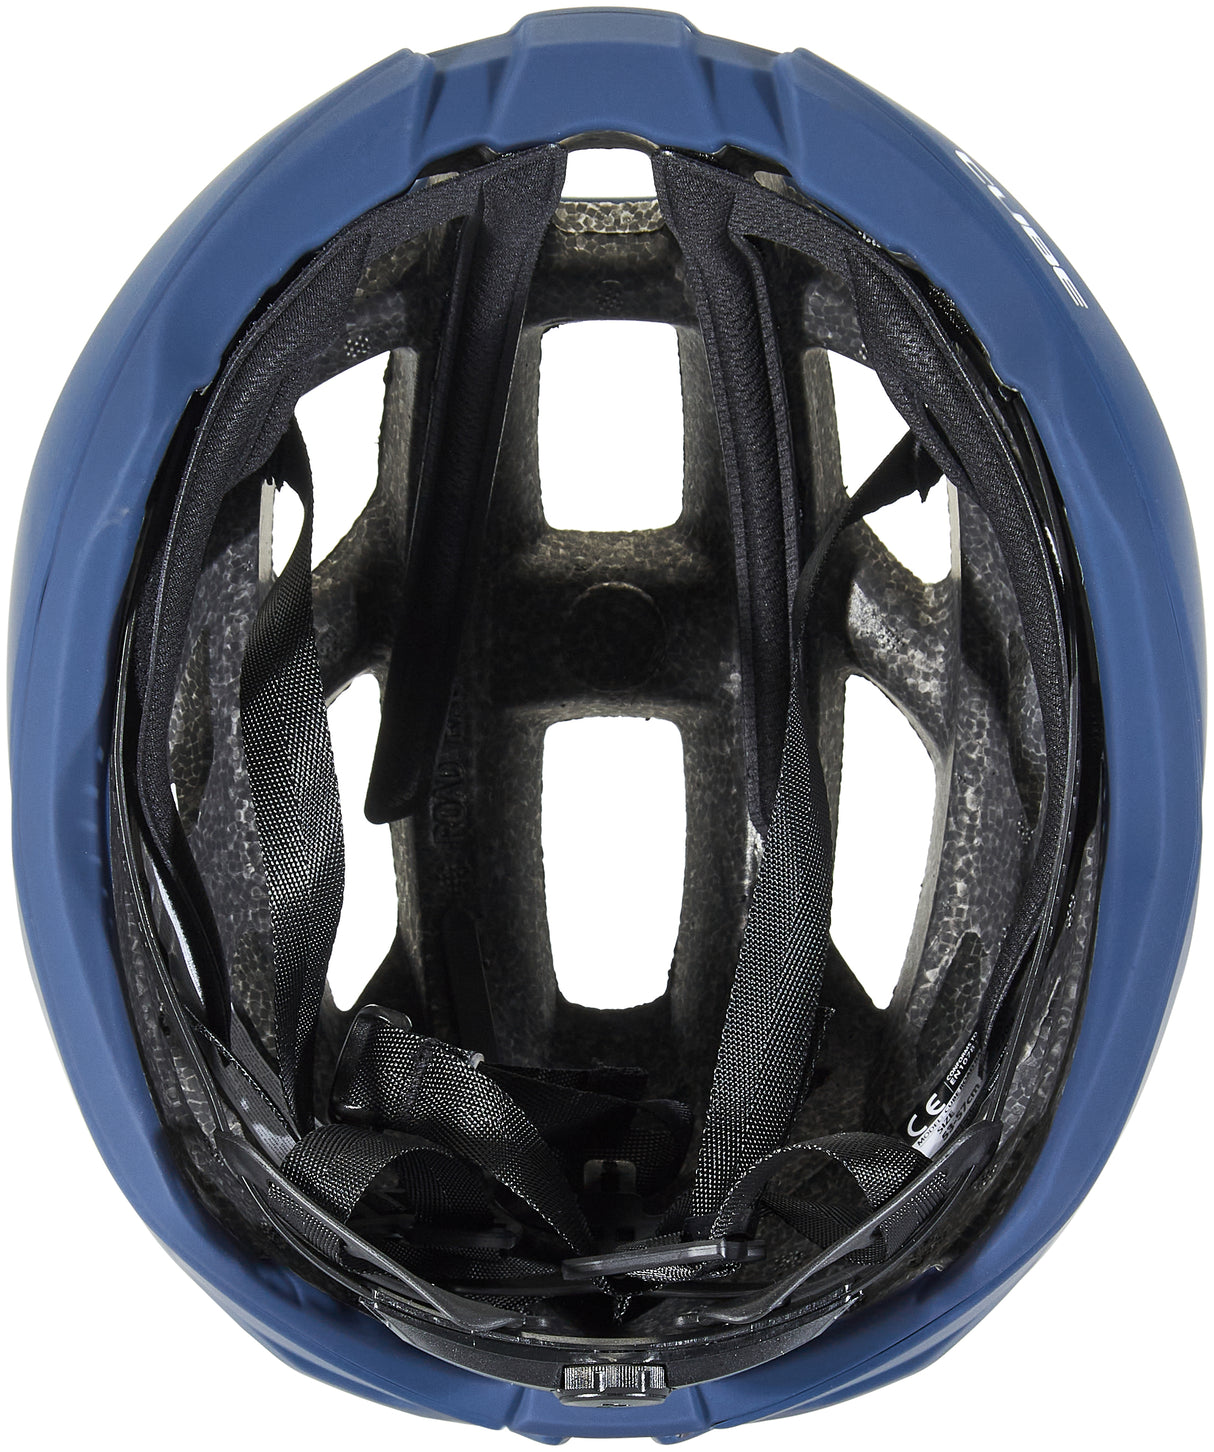 Cube Road Race Teamline Helm blau